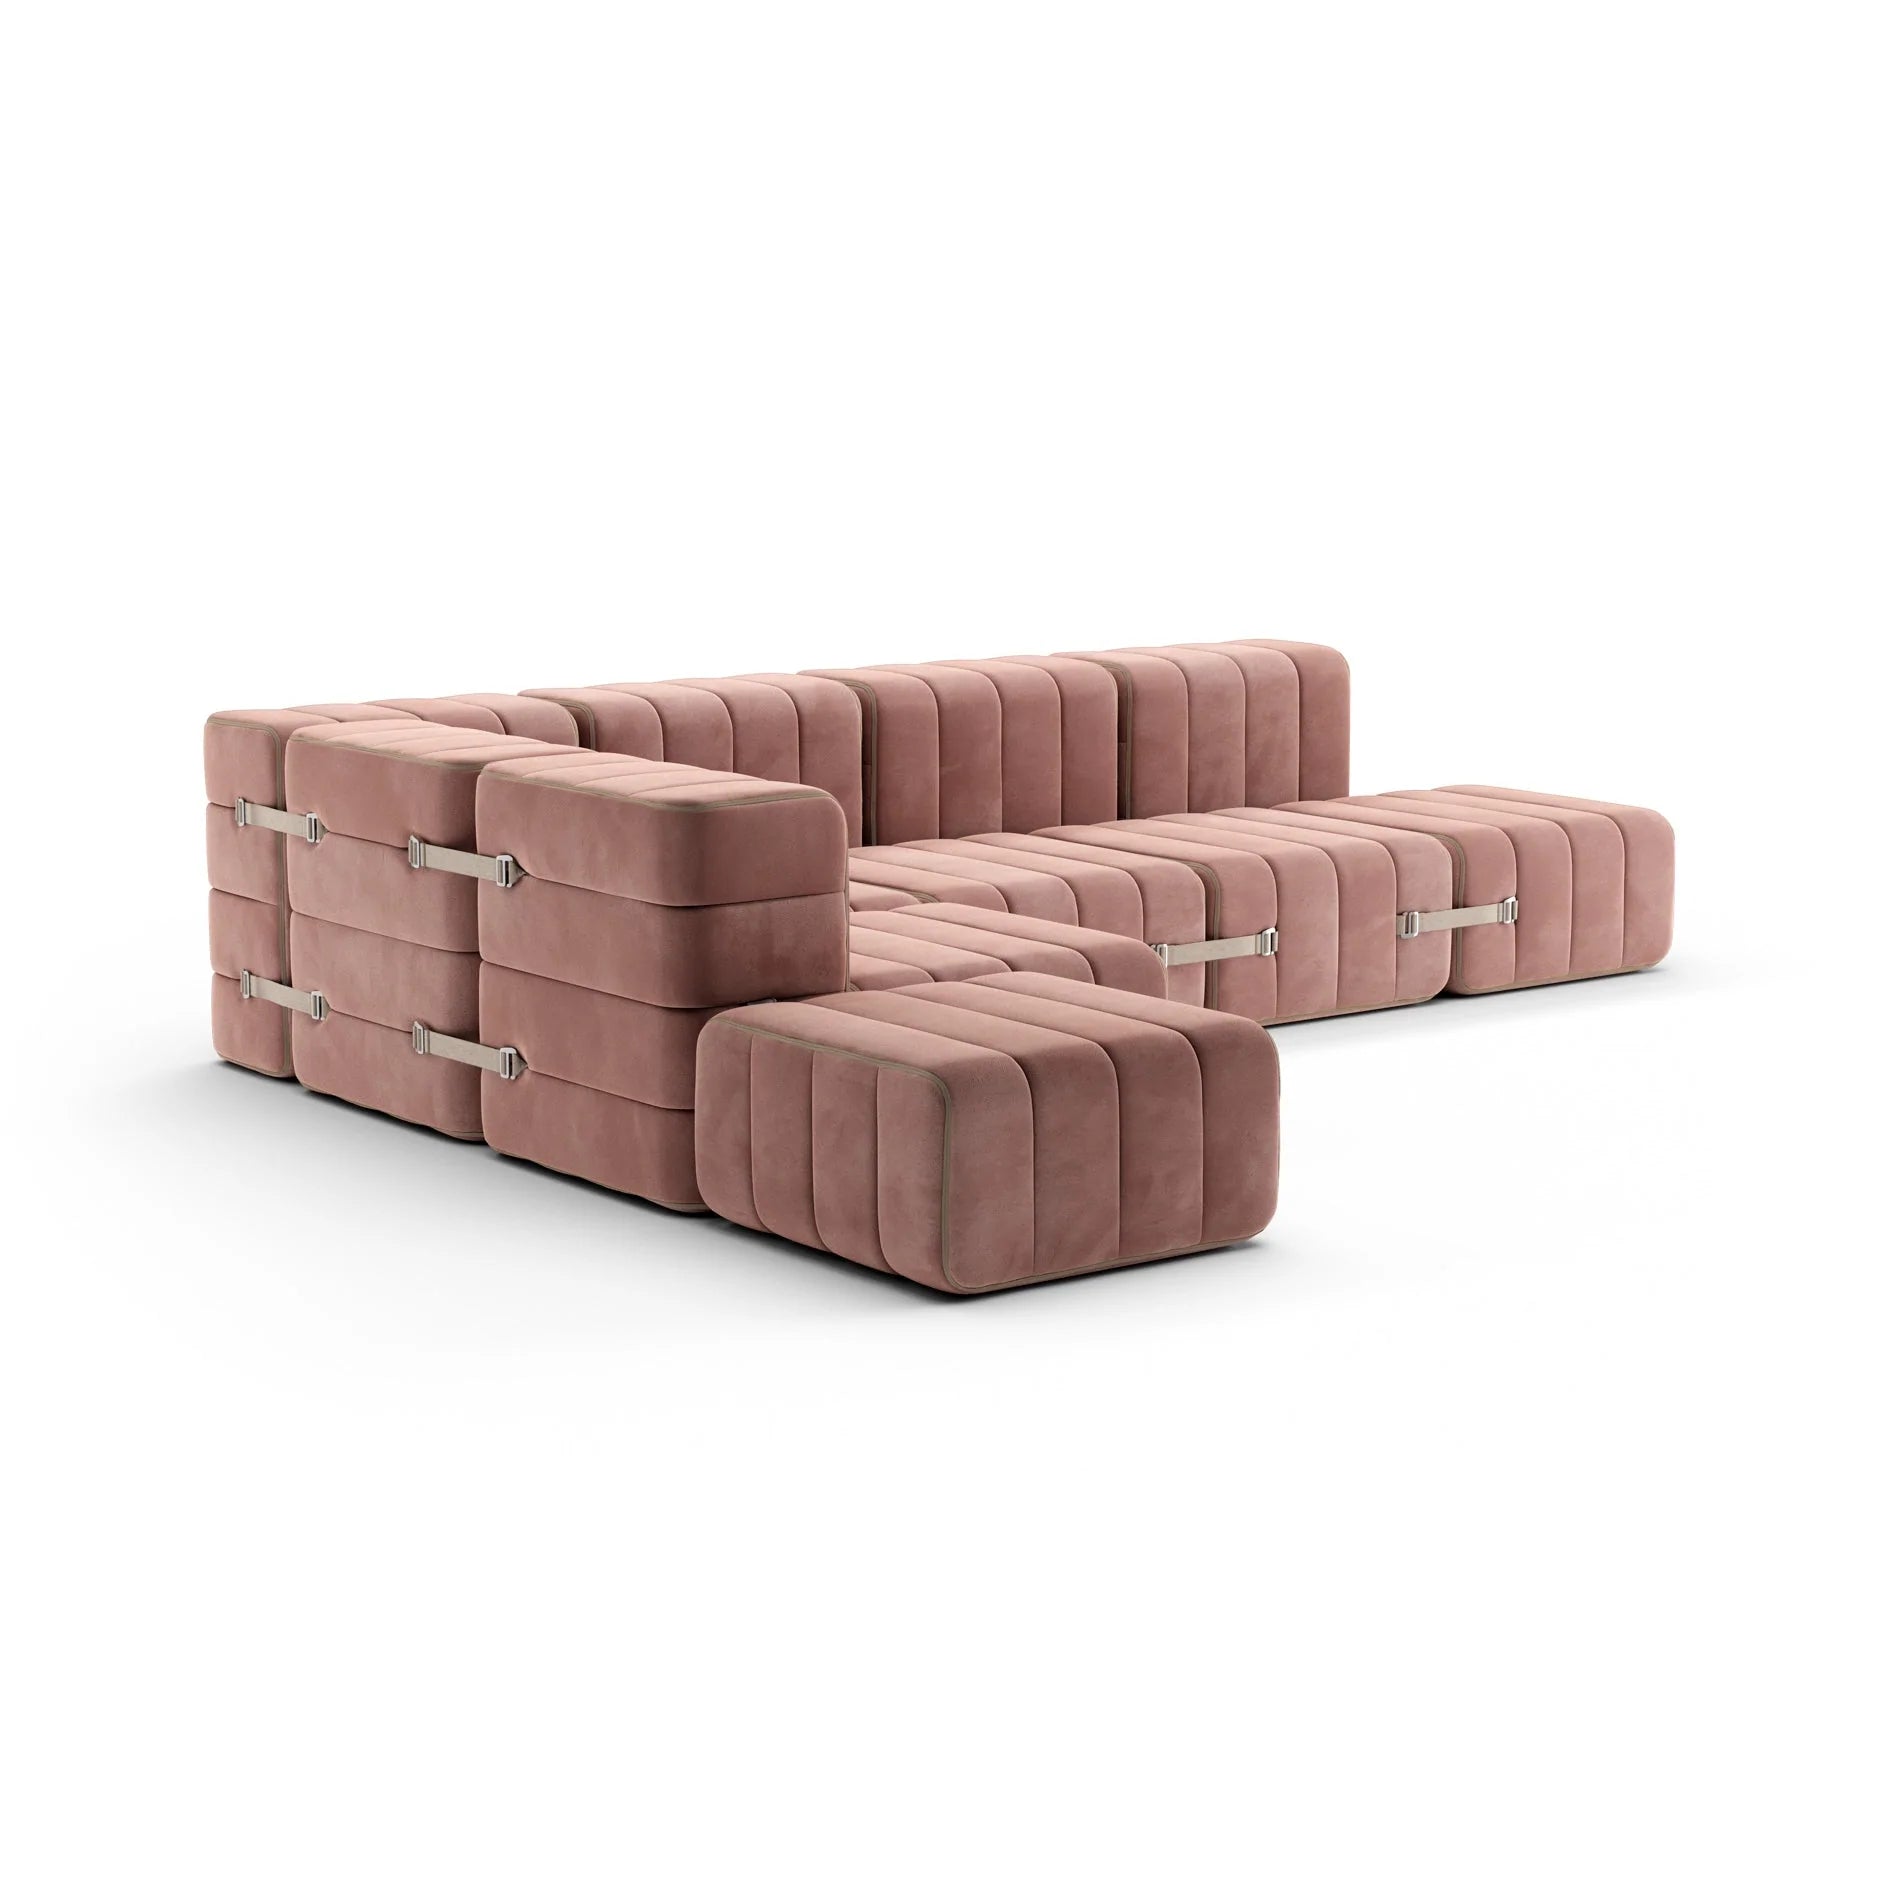 Modular sofa system Curt - Barcelona Lotus